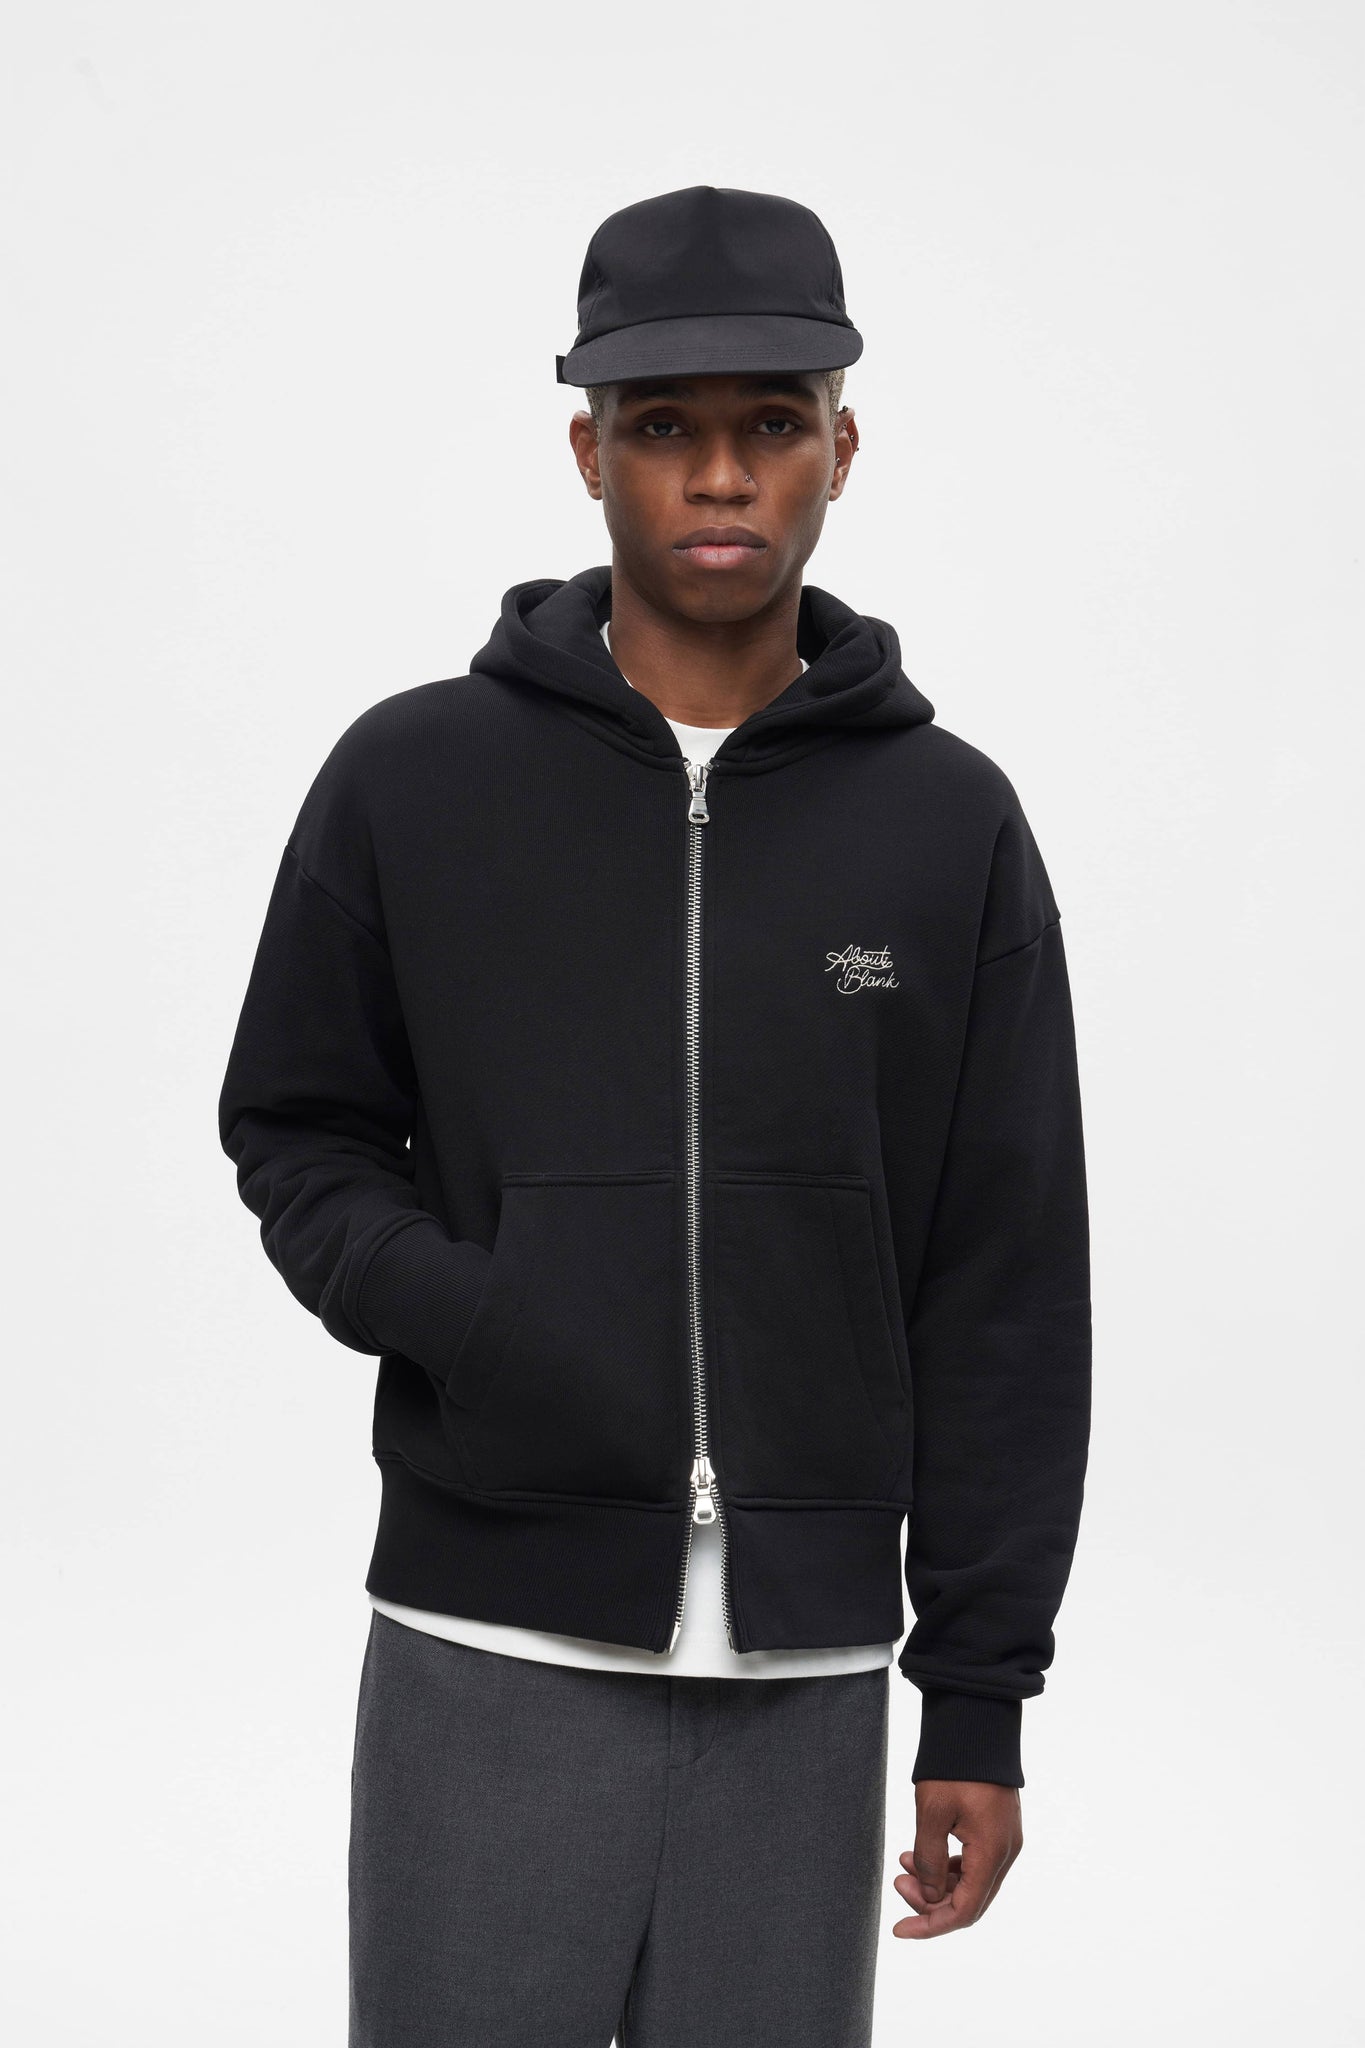 stacked double zip hoodie black/ecru